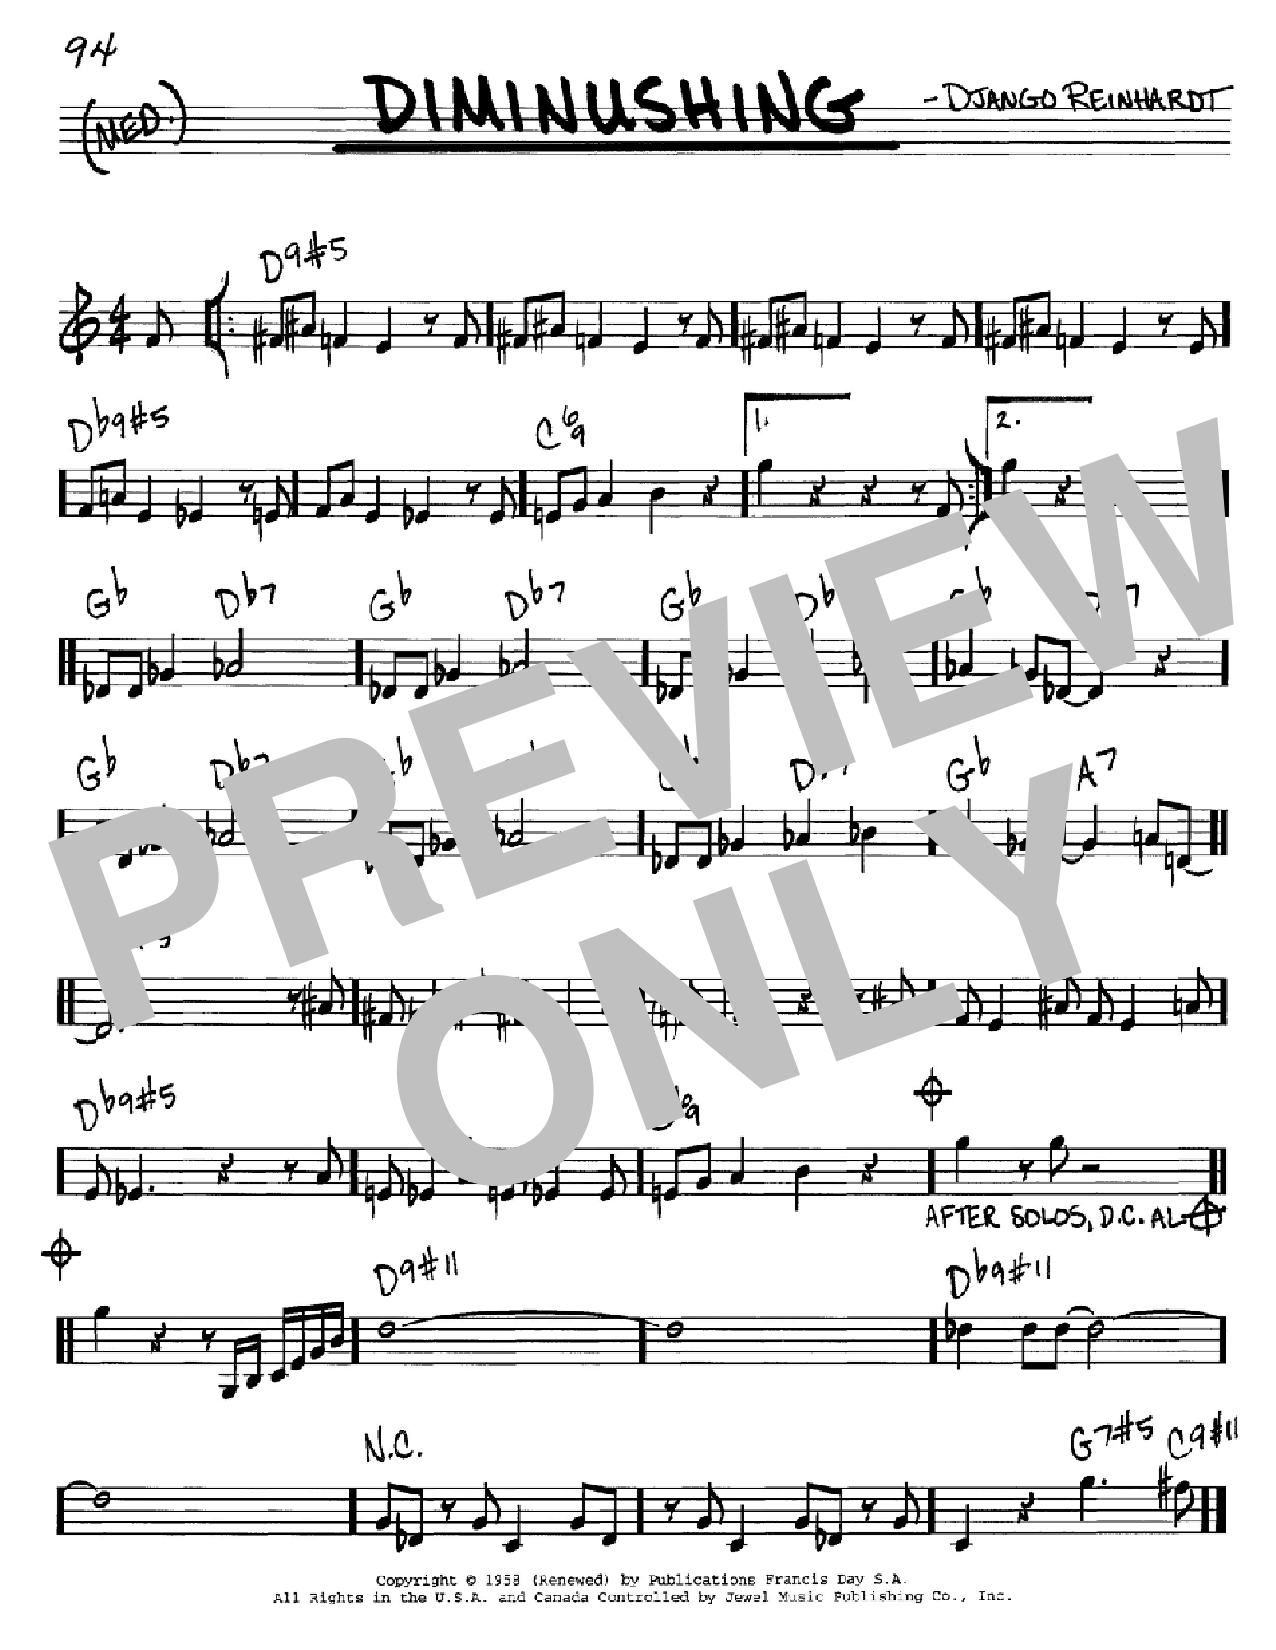 Django Reinhardt Diminushing Sheet Music Notes & Chords for Real Book - Melody & Chords - C Instruments - Download or Print PDF